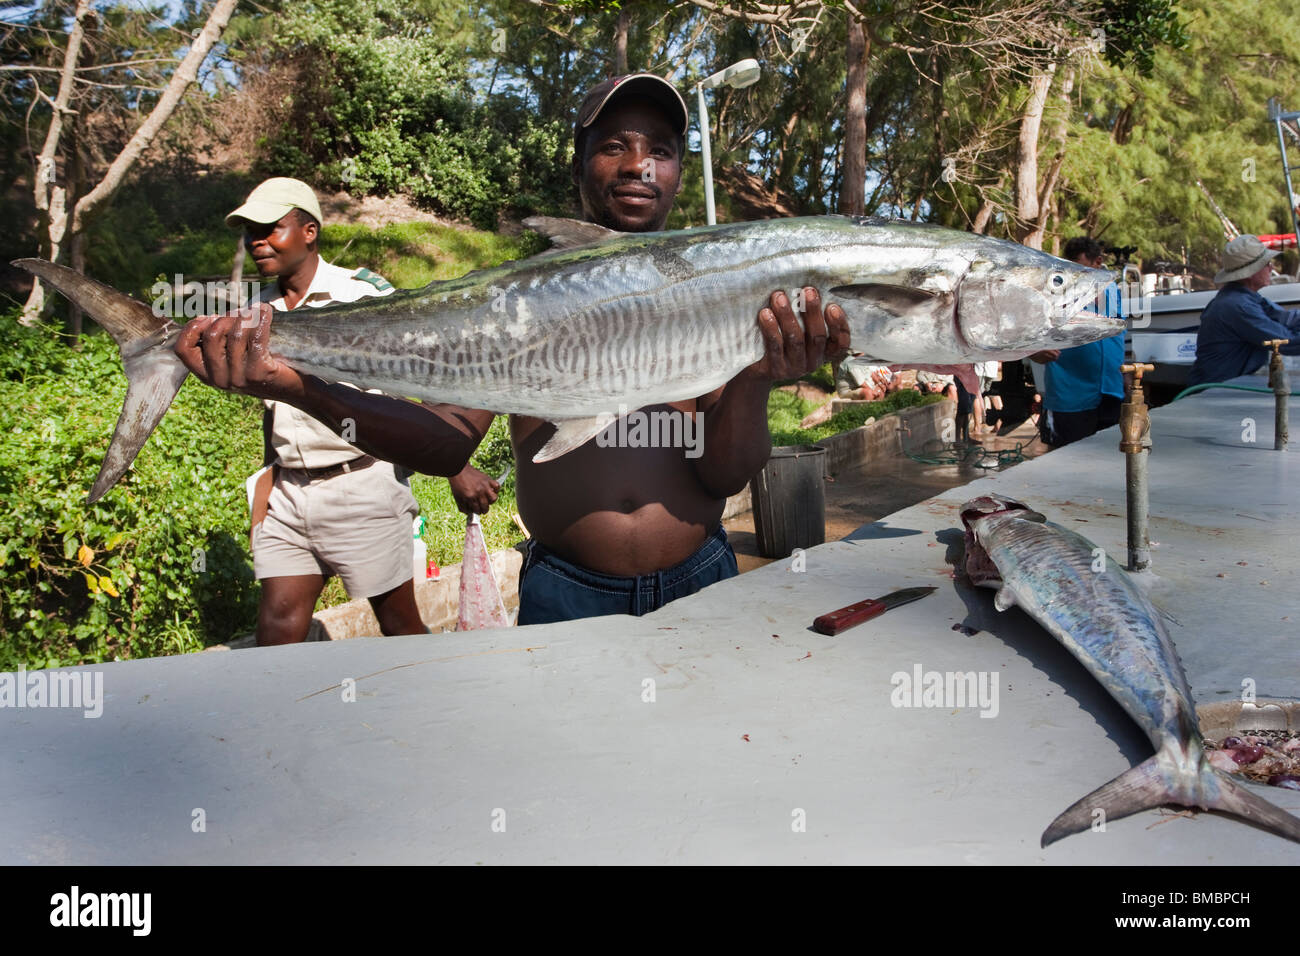 Pescatore con couta, Sgombro King, a Cape Vidal, Isimangaliso Wetland Park, KwaZulu Natal, Sud Africa Foto Stock